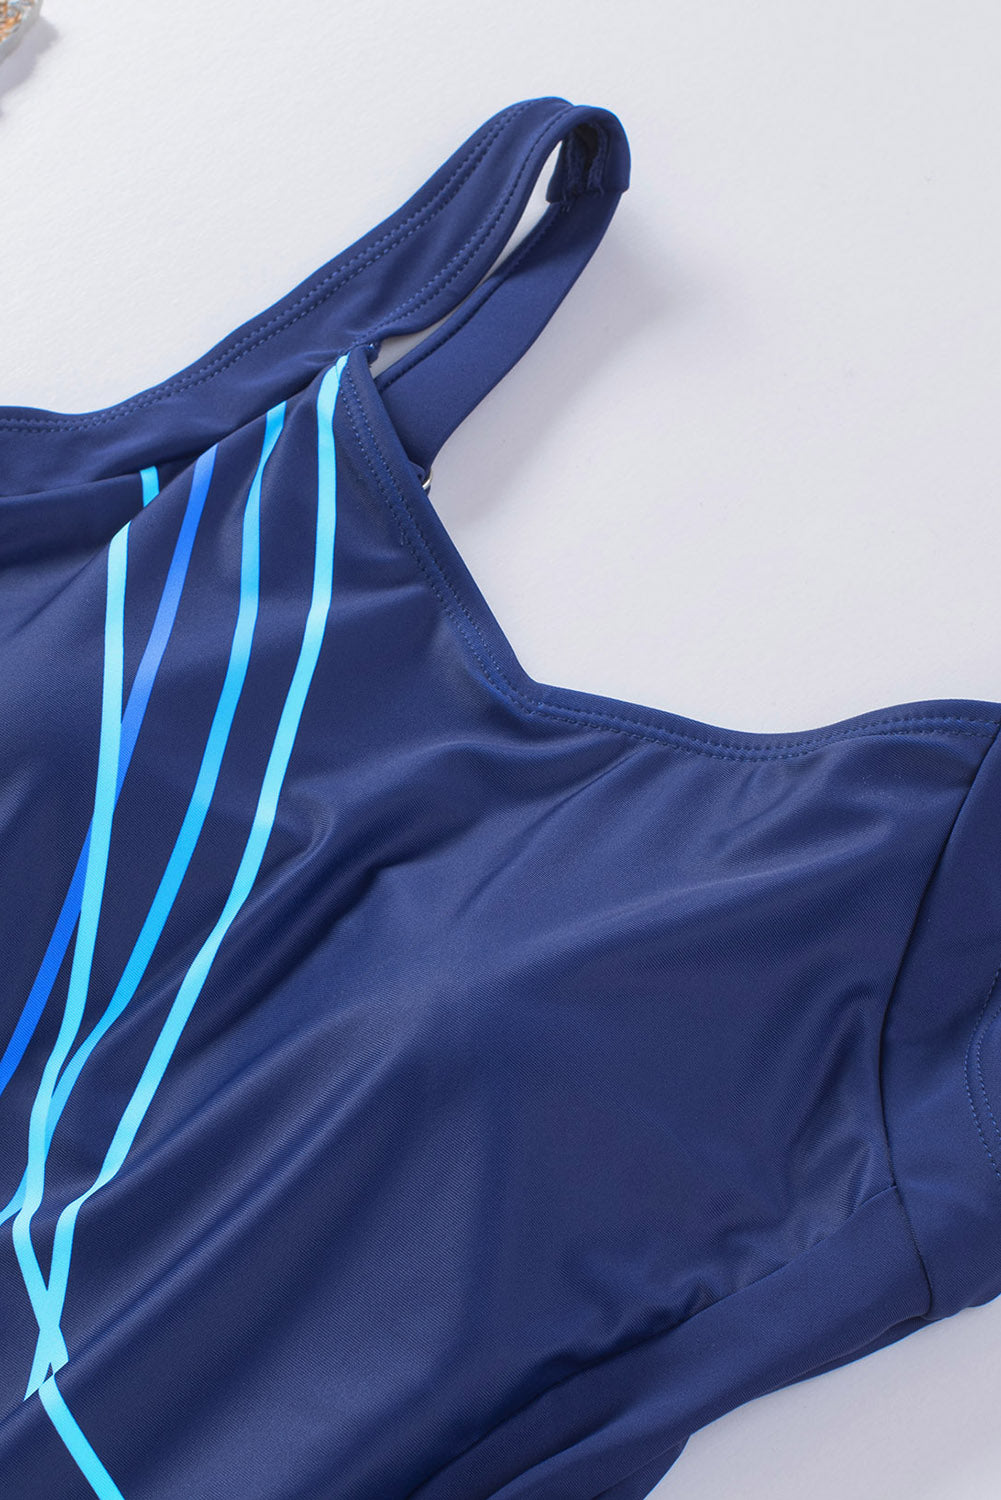 LC442787-205-S, LC442787-205-M, LC442787-205-L, LC442787-205-XL, LC442787-205-2XL, Blue Women's One Piece Swimsuit Striped Pattern Print Sleeveless Bathing Suit